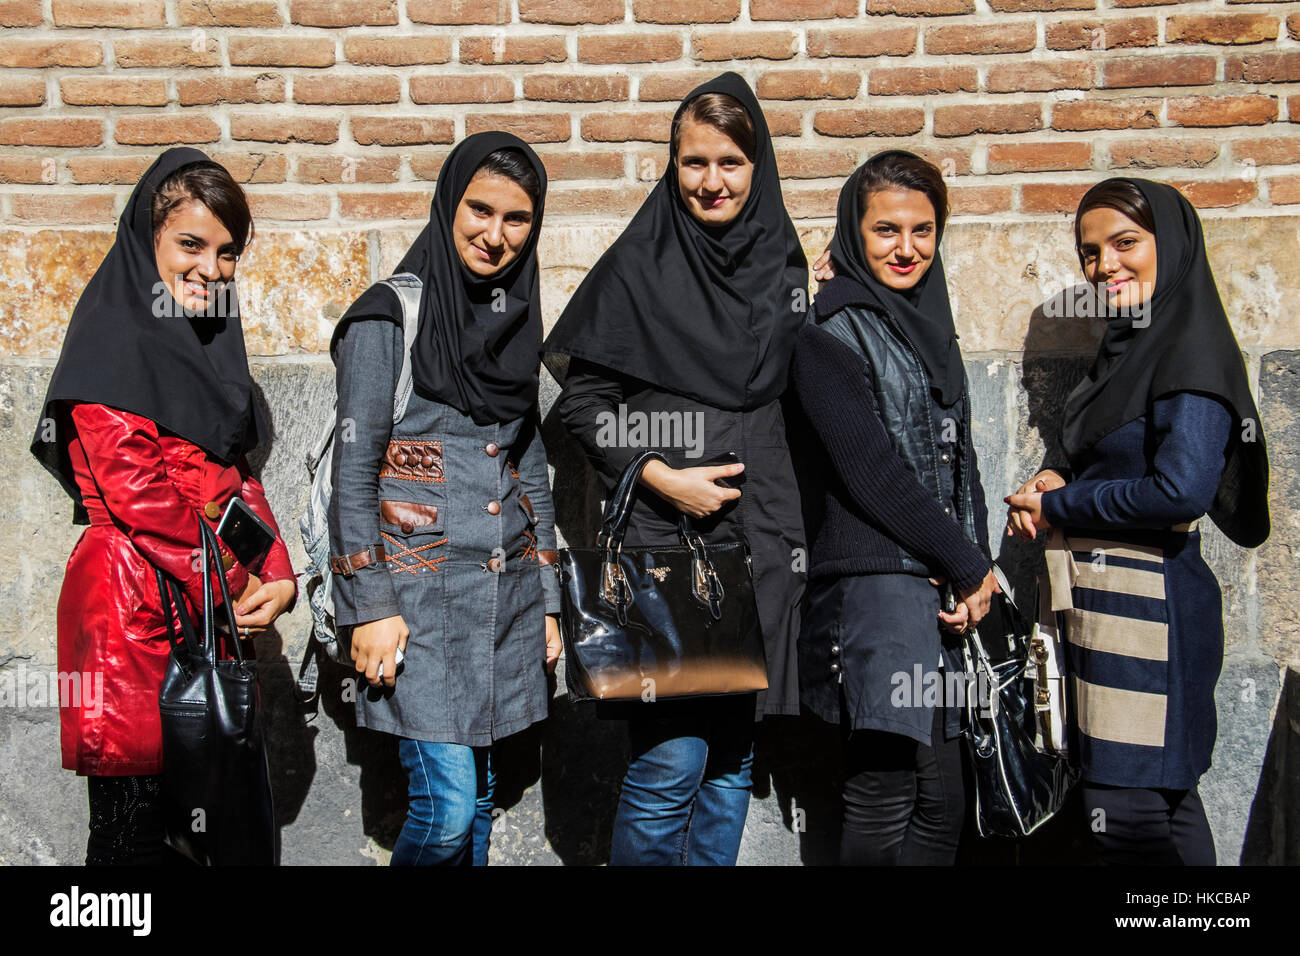 portrait-of-five-young-women-ardabil-iran-HKCBAP.jpg